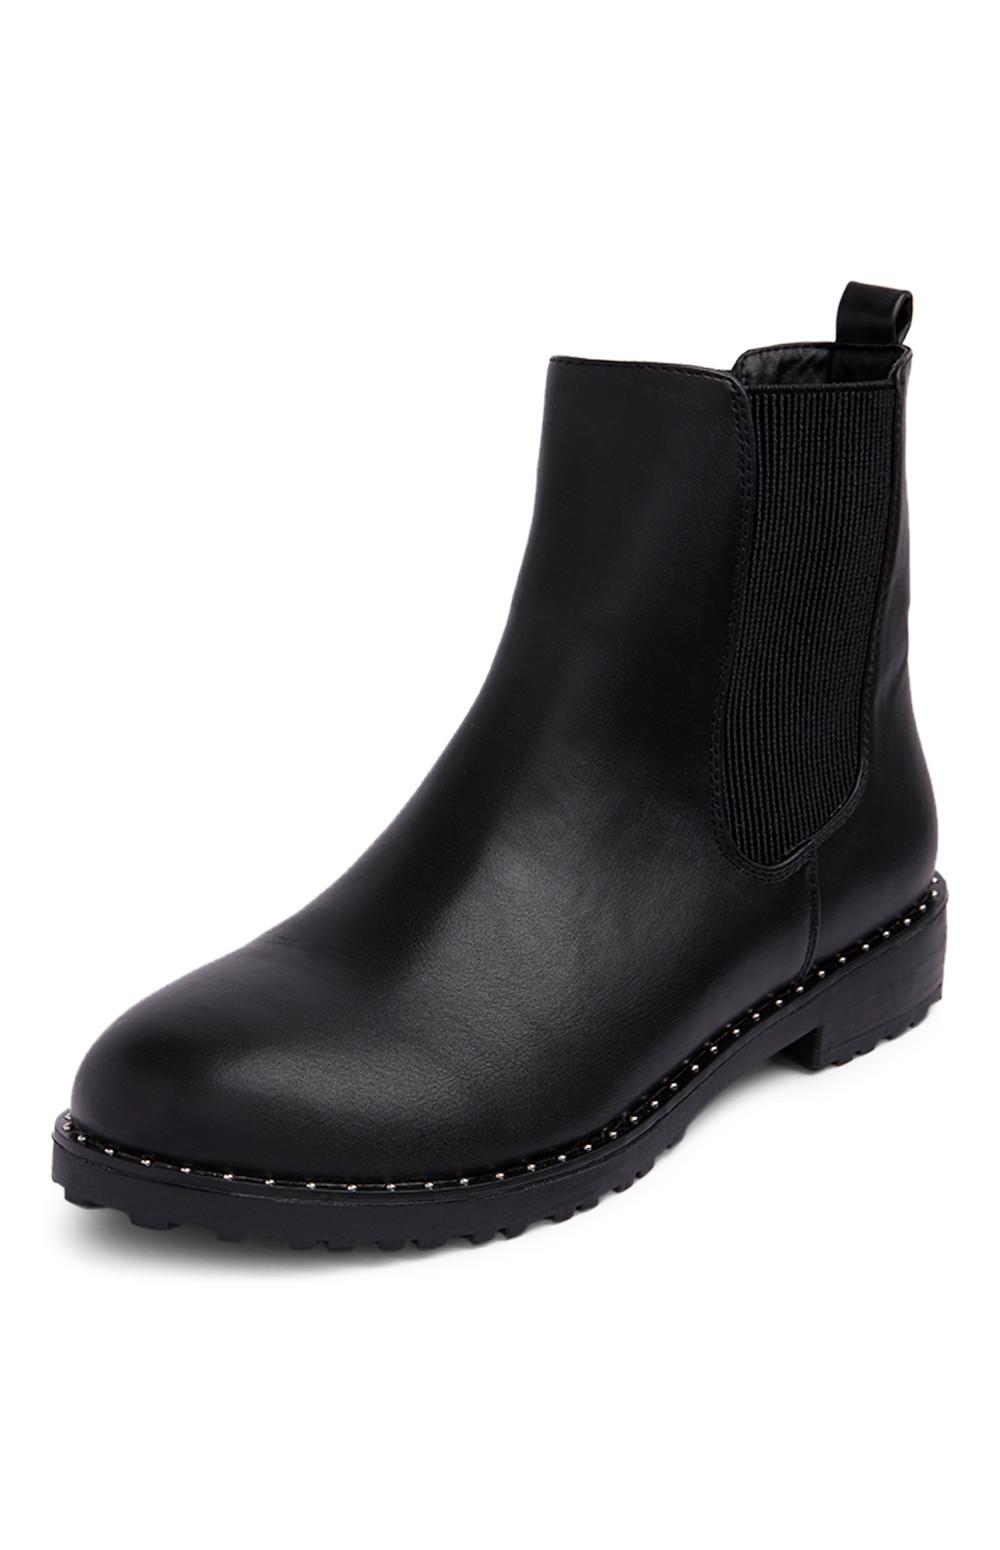 primark black chelsea boots